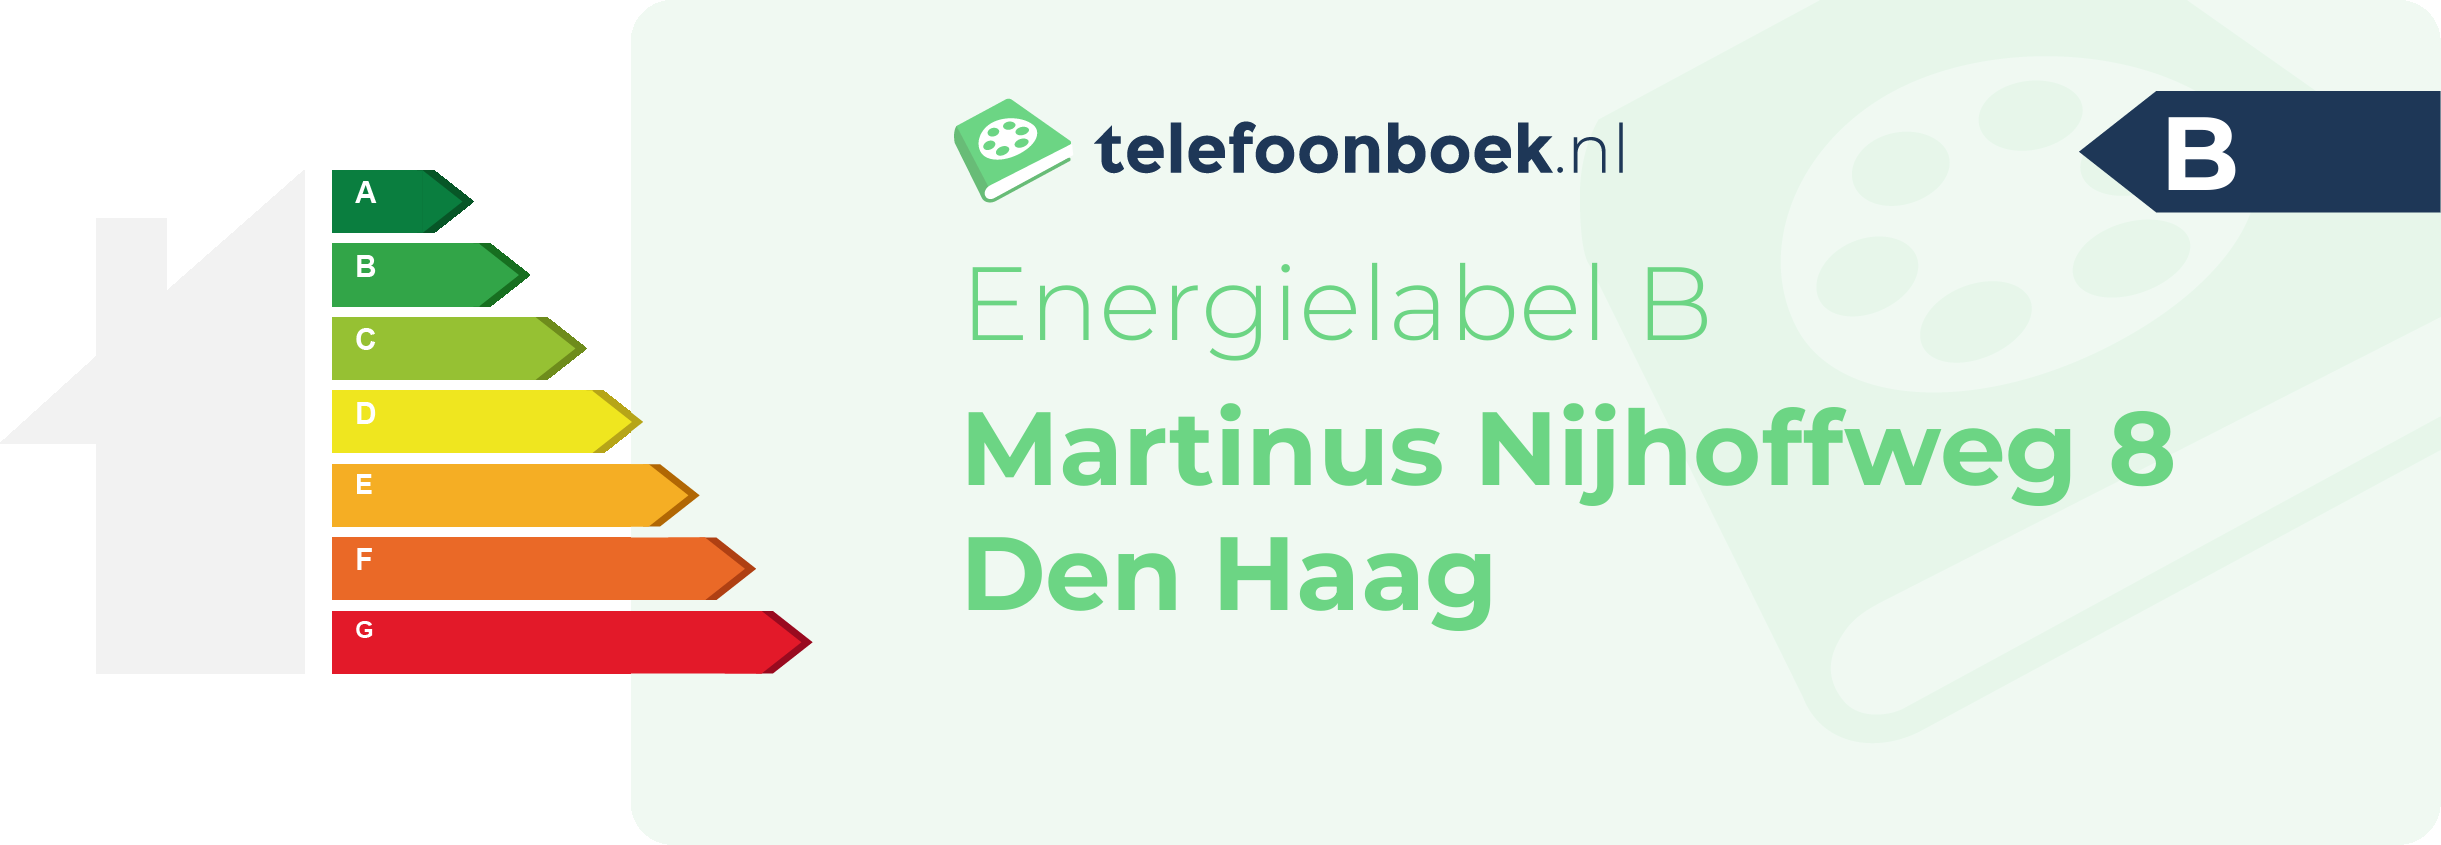 Energielabel Martinus Nijhoffweg 8 Den Haag